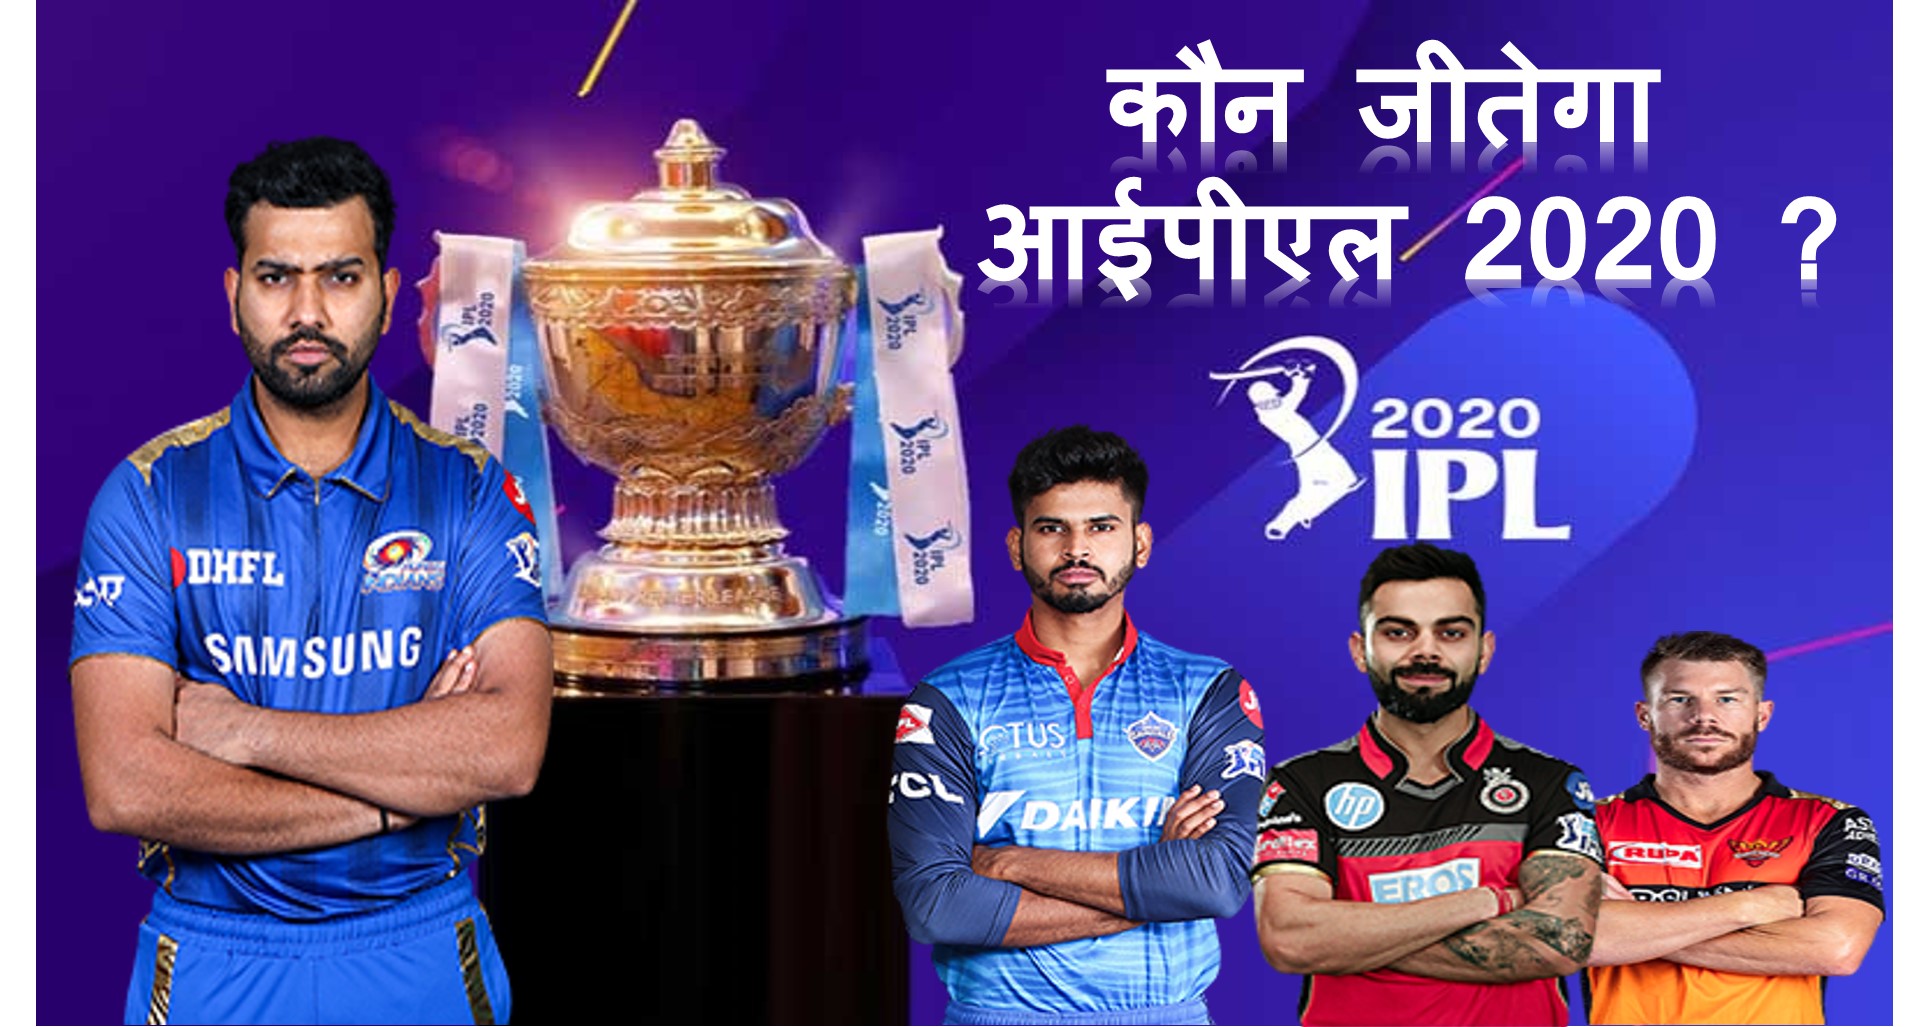 Who win IPL 2020